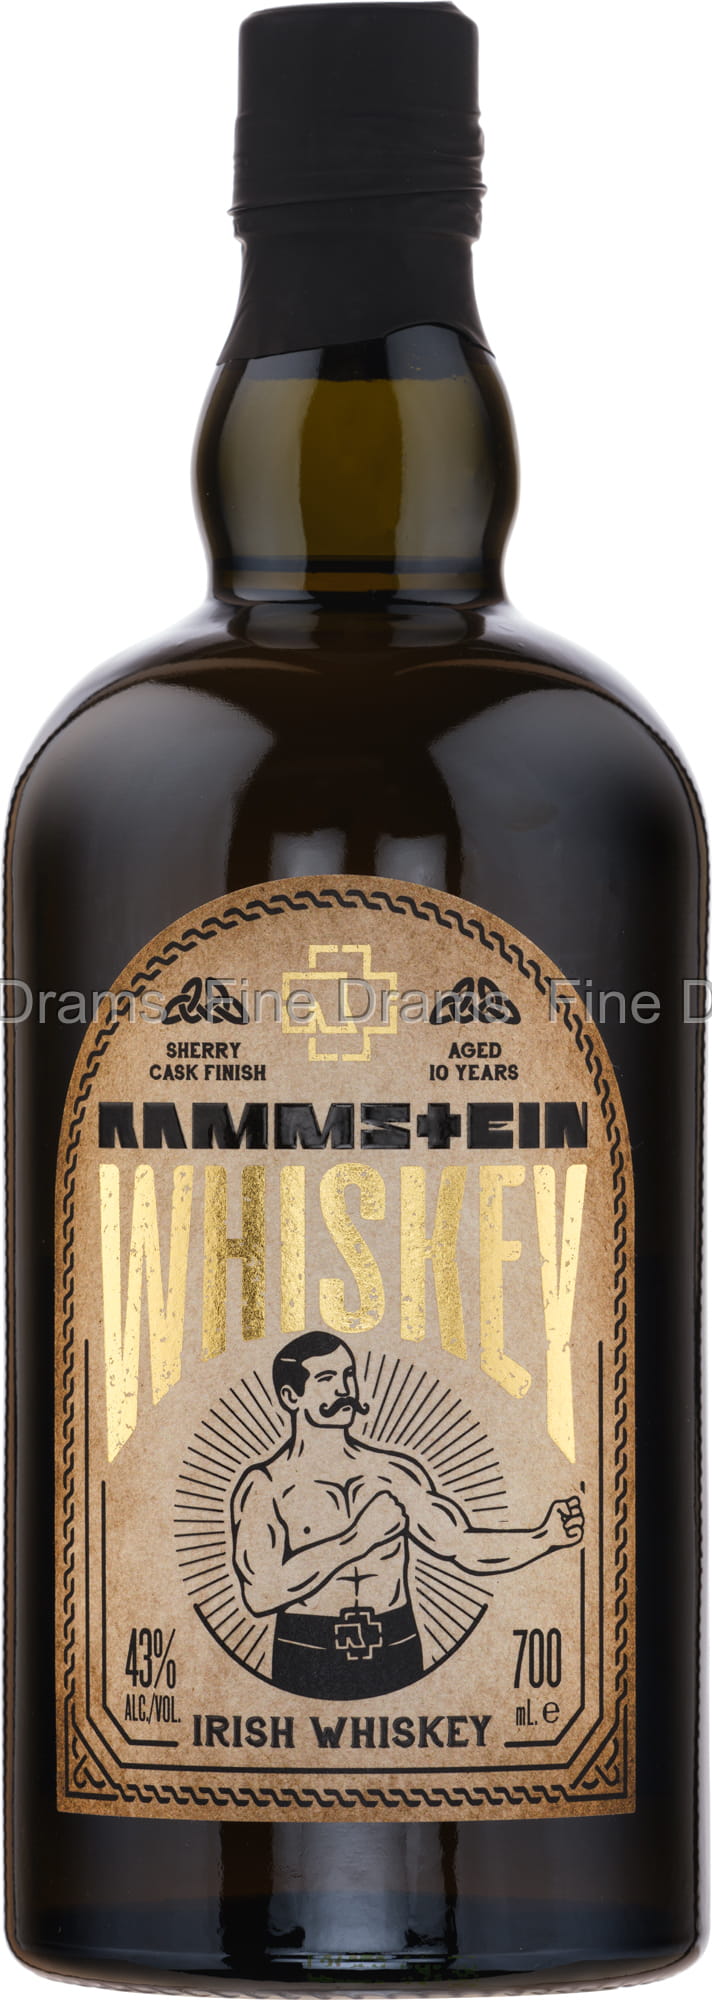 Rammstein Rum  Whisky Auctioneer